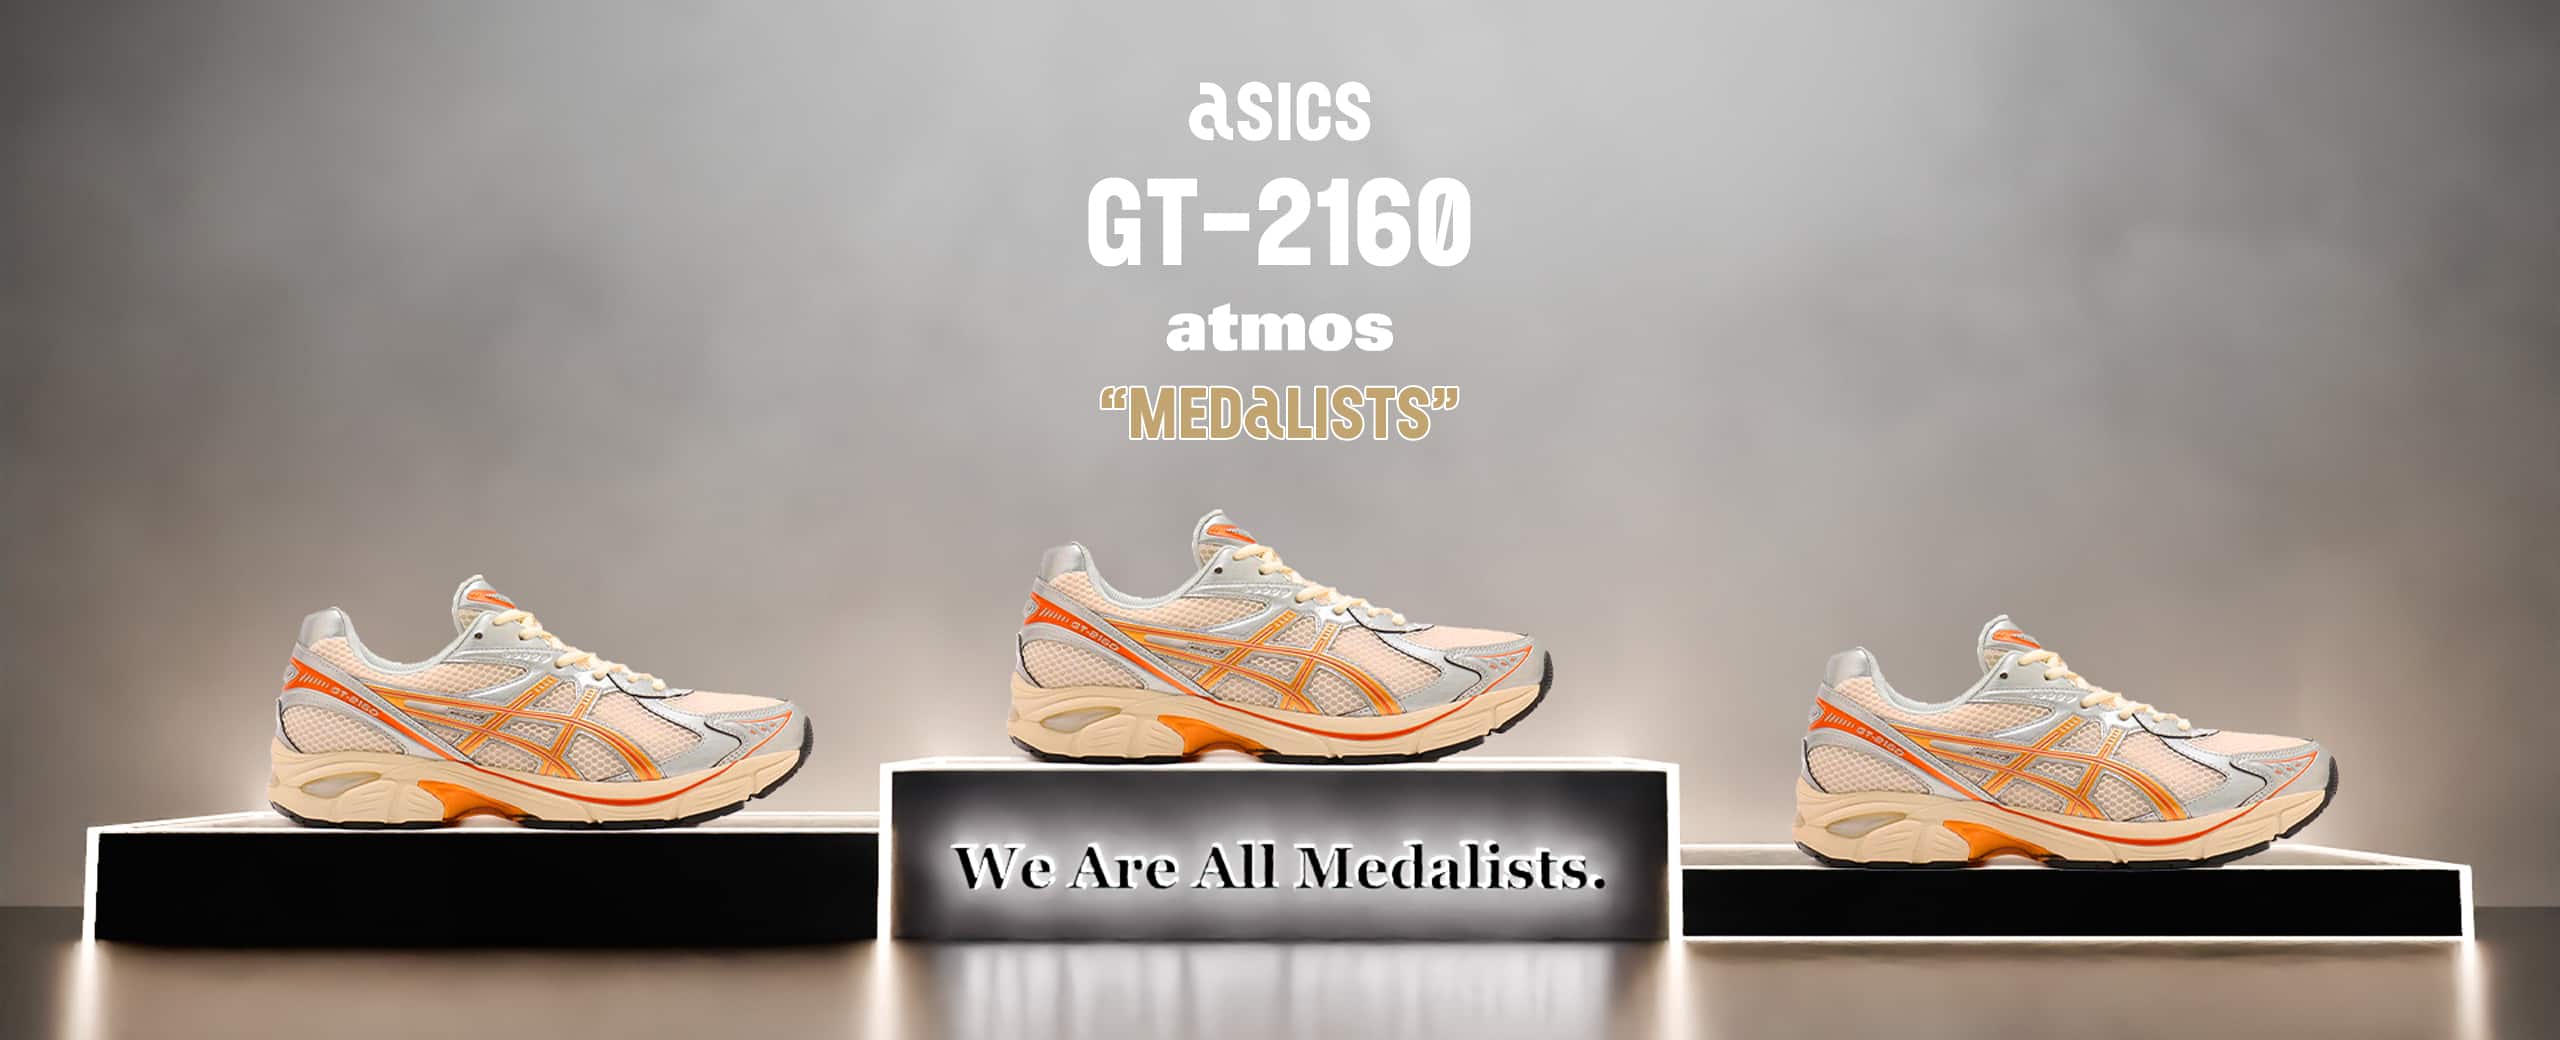 "asics GT-2160 atmos "MEDALISTS""